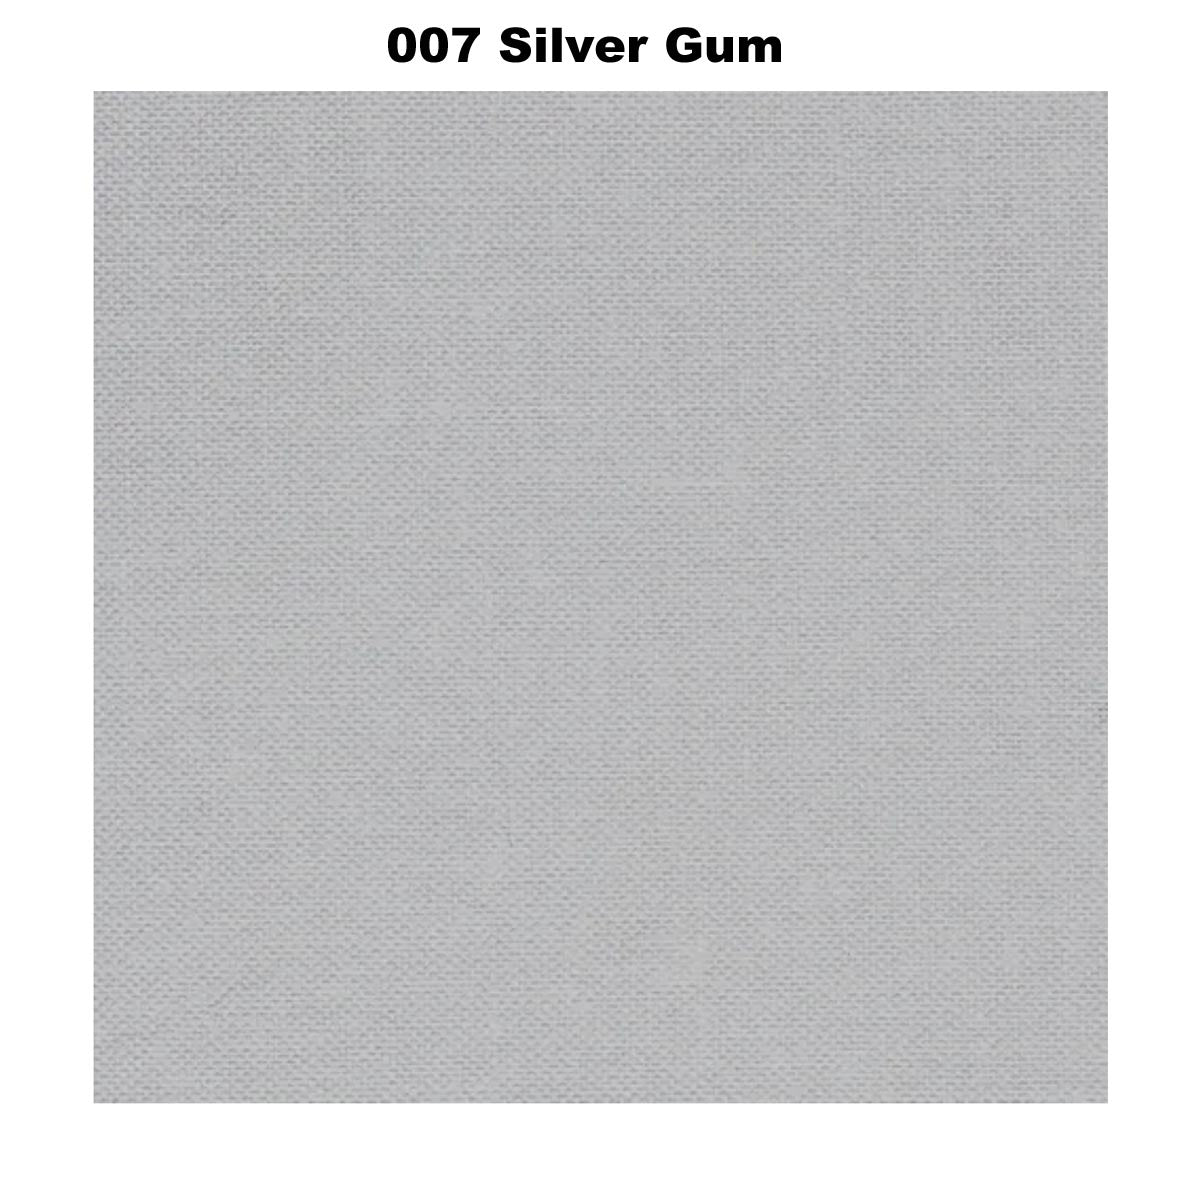 D/S Devonstone Solids - 007 Silver Gum